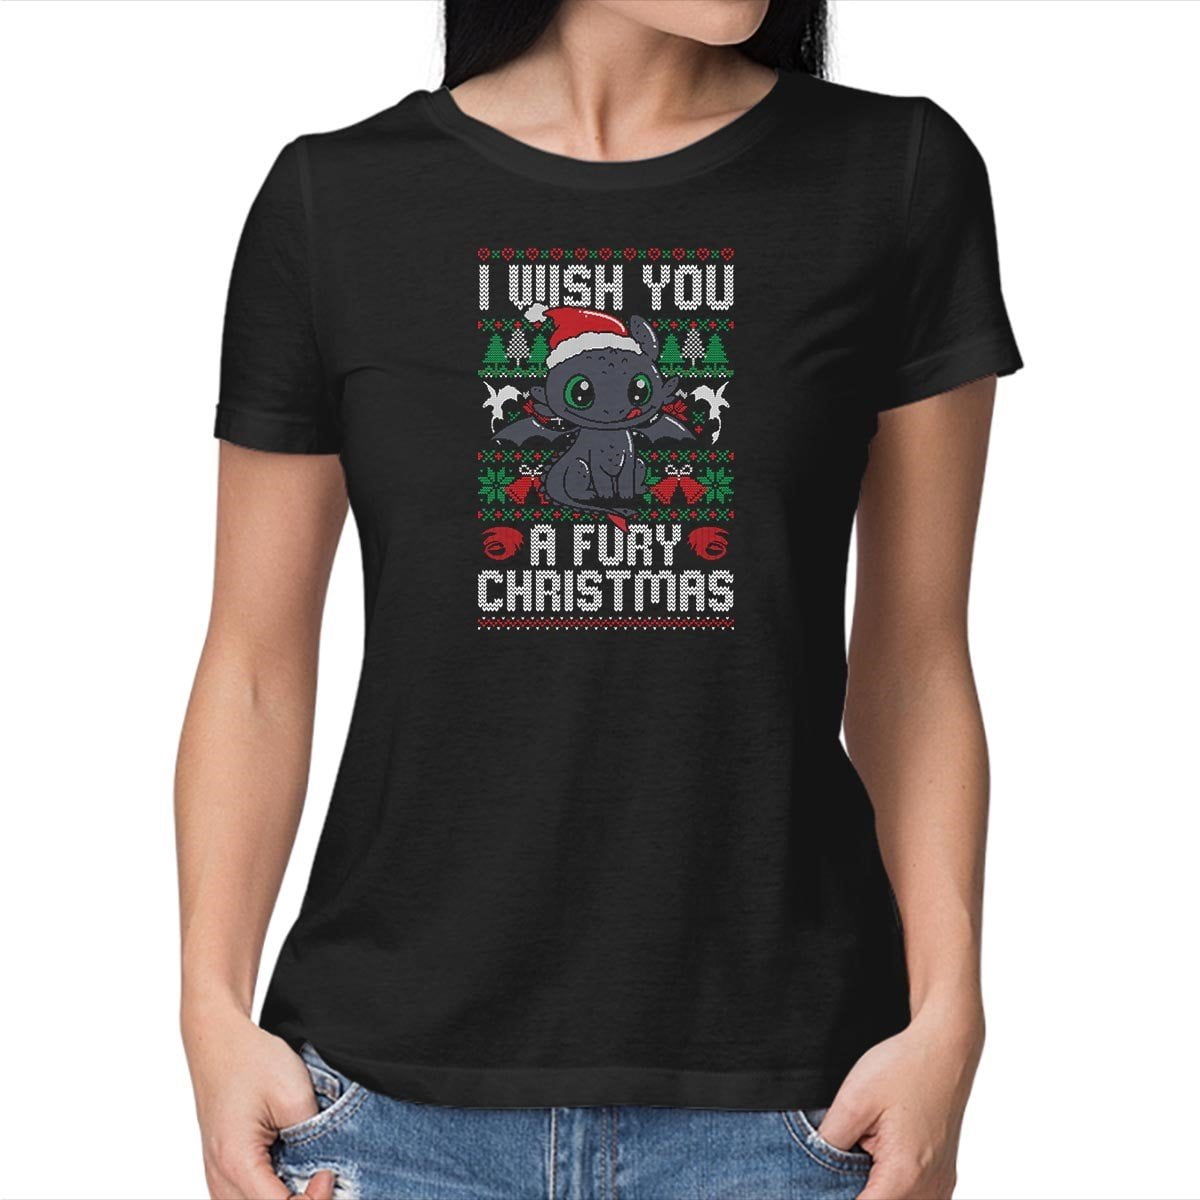 TeeFury Women's Graphic T-shirt Fury Christmas - Ugly Sweater